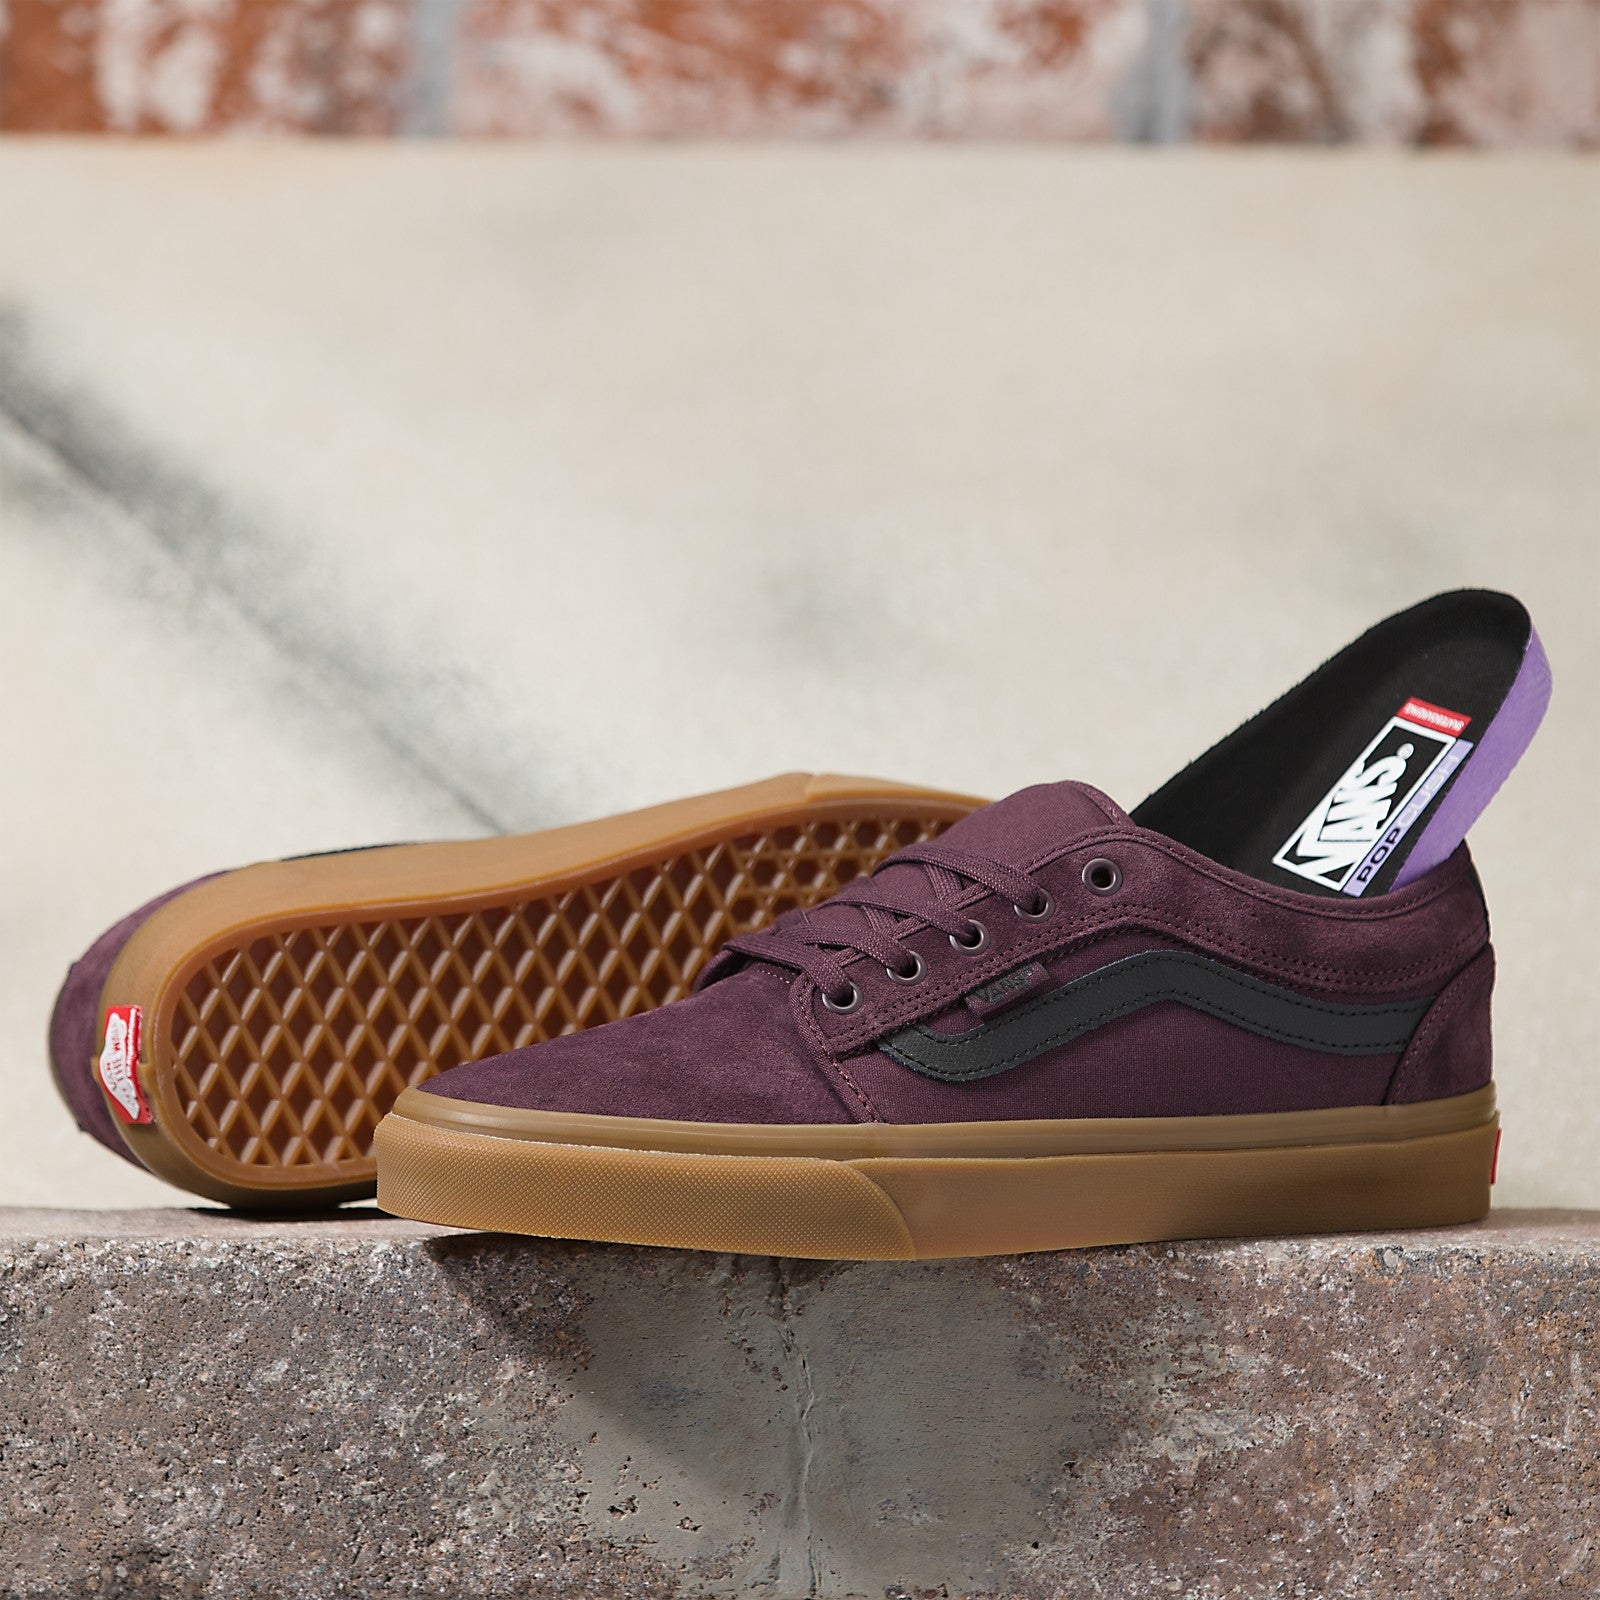 Port/Gum Chukka Low Sidestripe Vans Skateboard Shoe